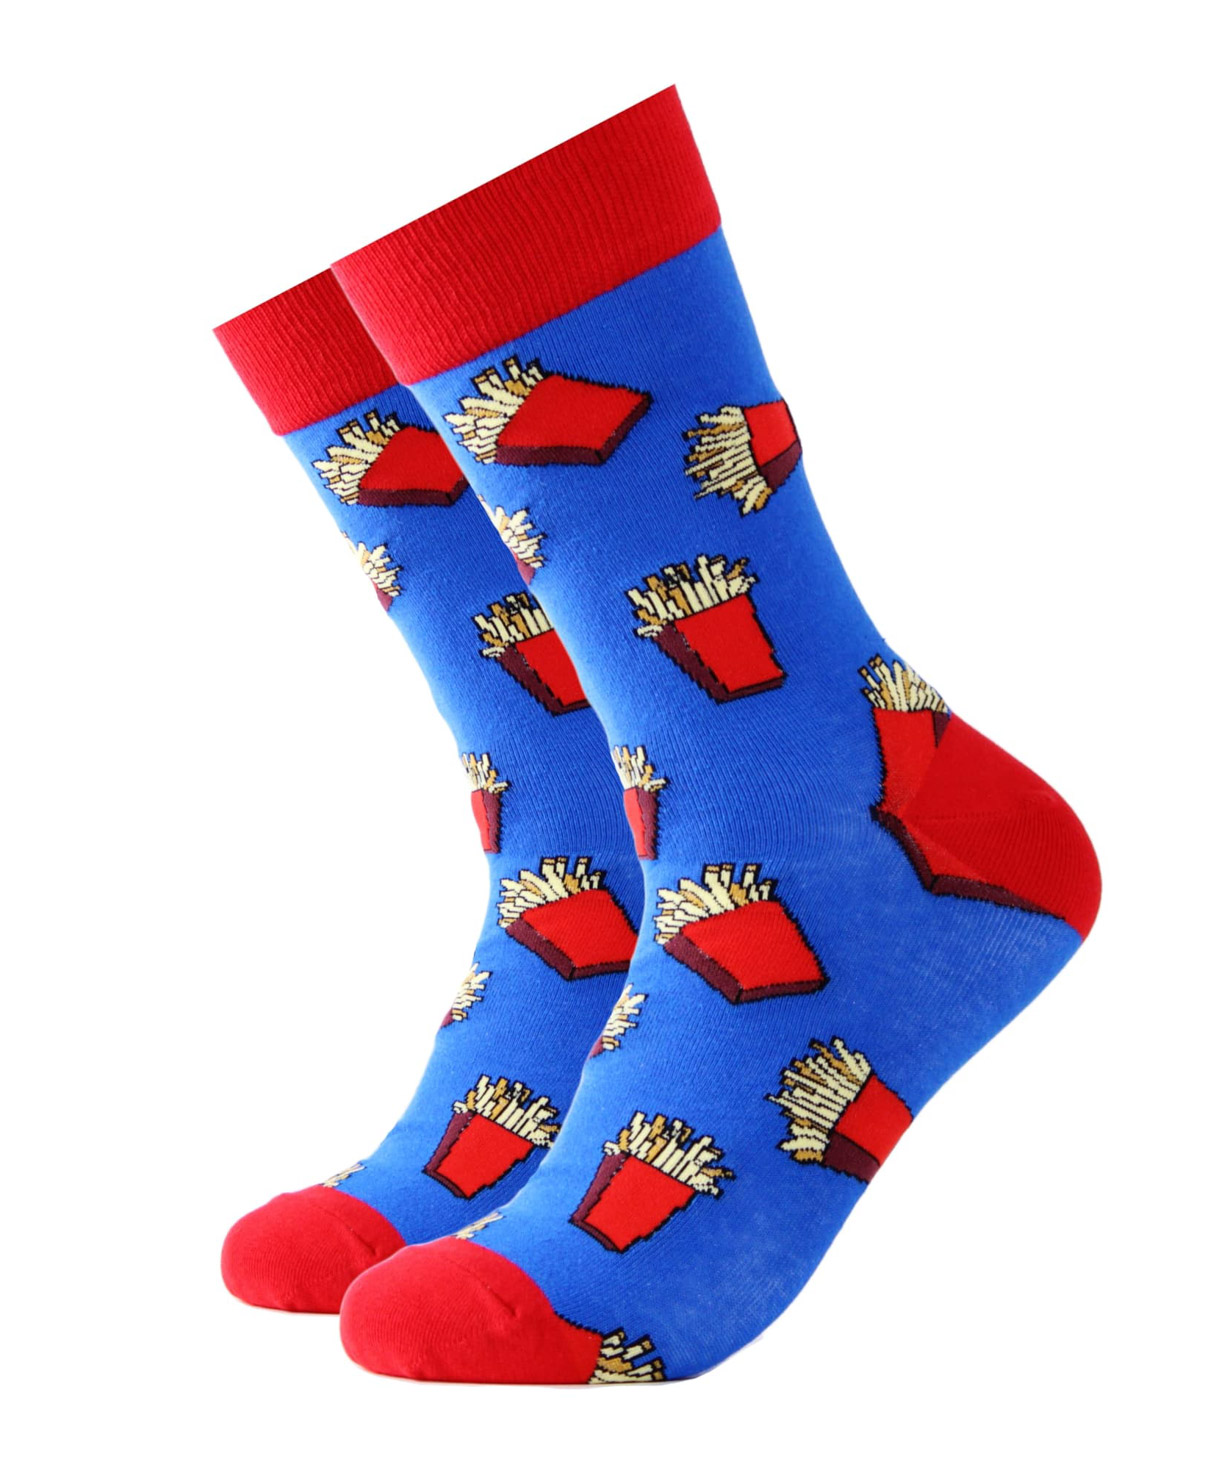 Socks `Zeal Socks` fry